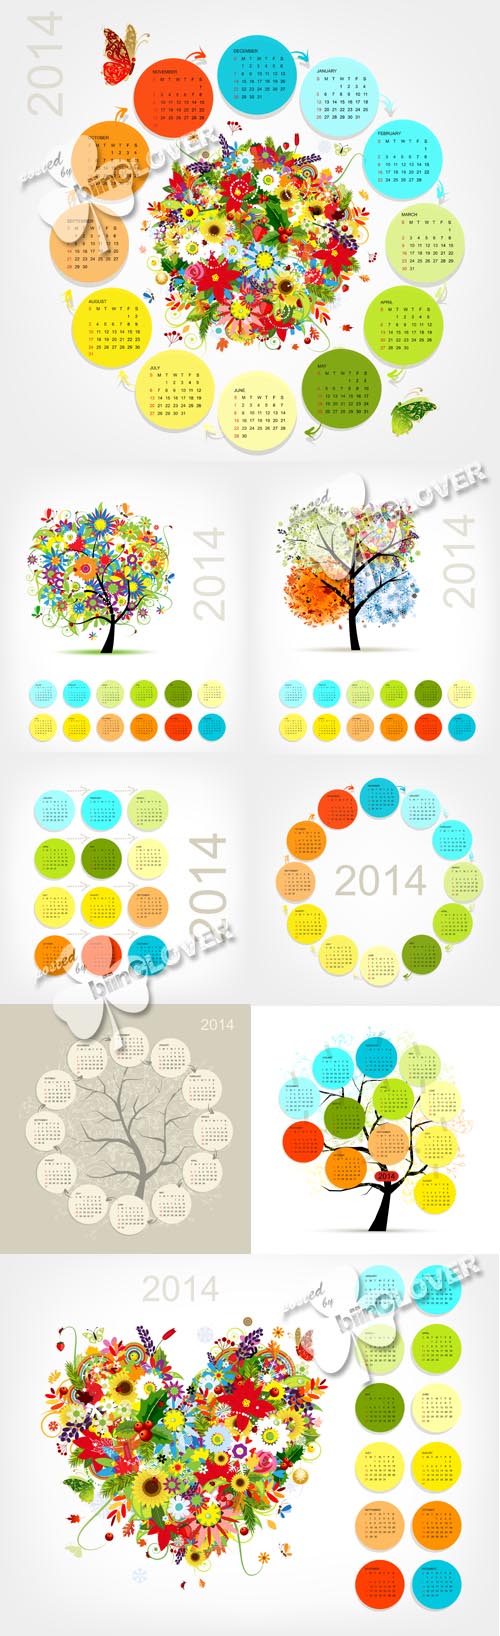 Calendar 2014 design 0498